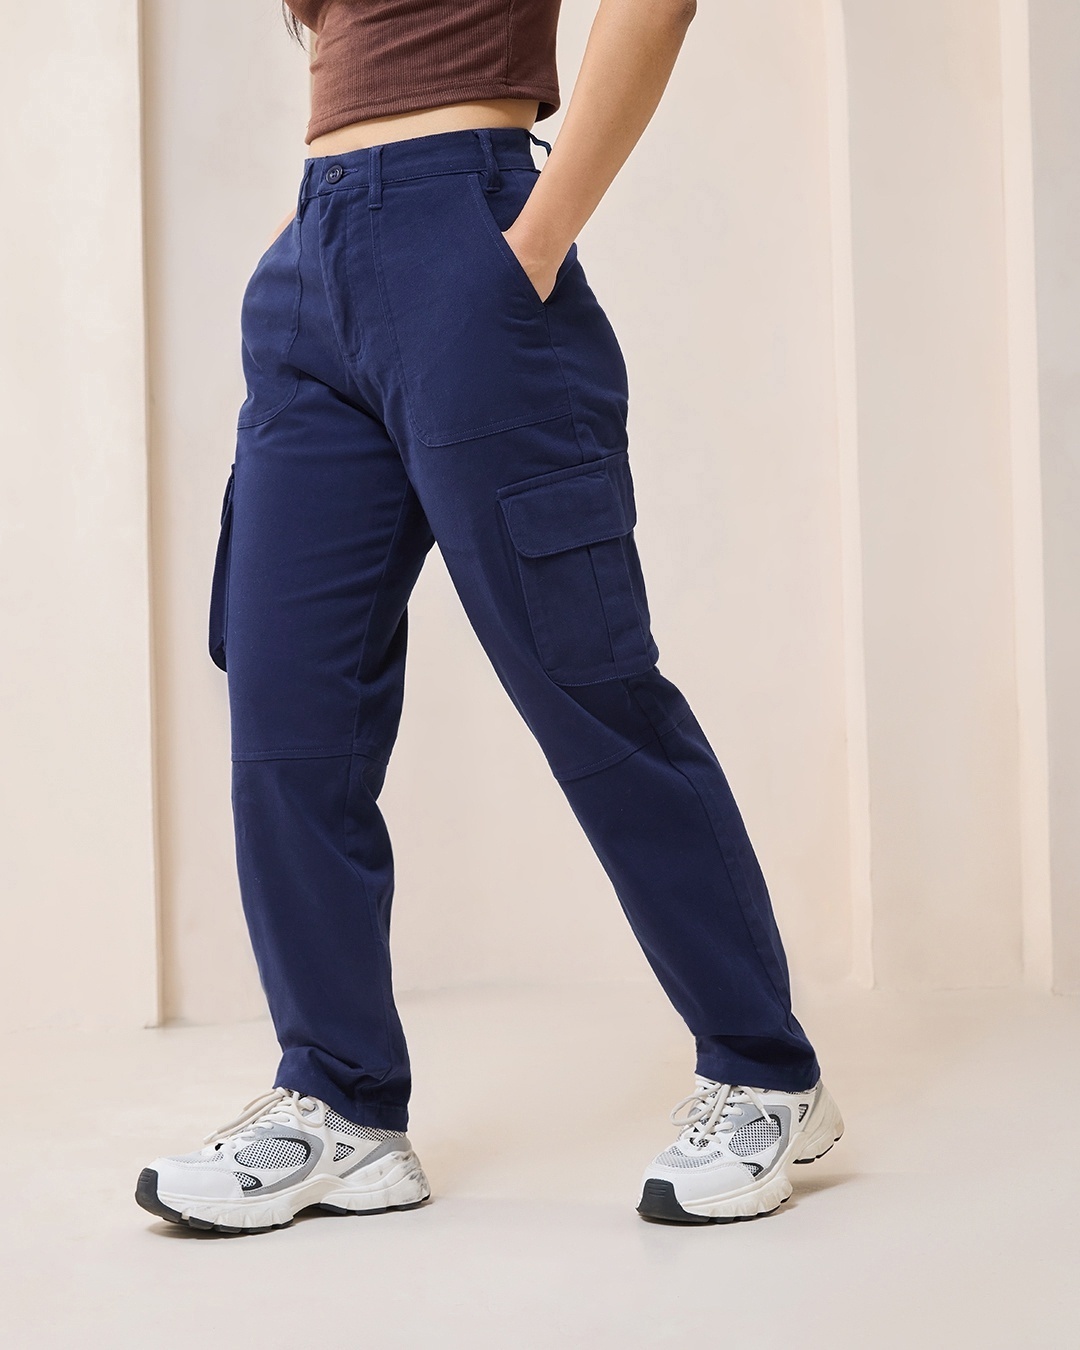 Blue Cargo Pants for Women